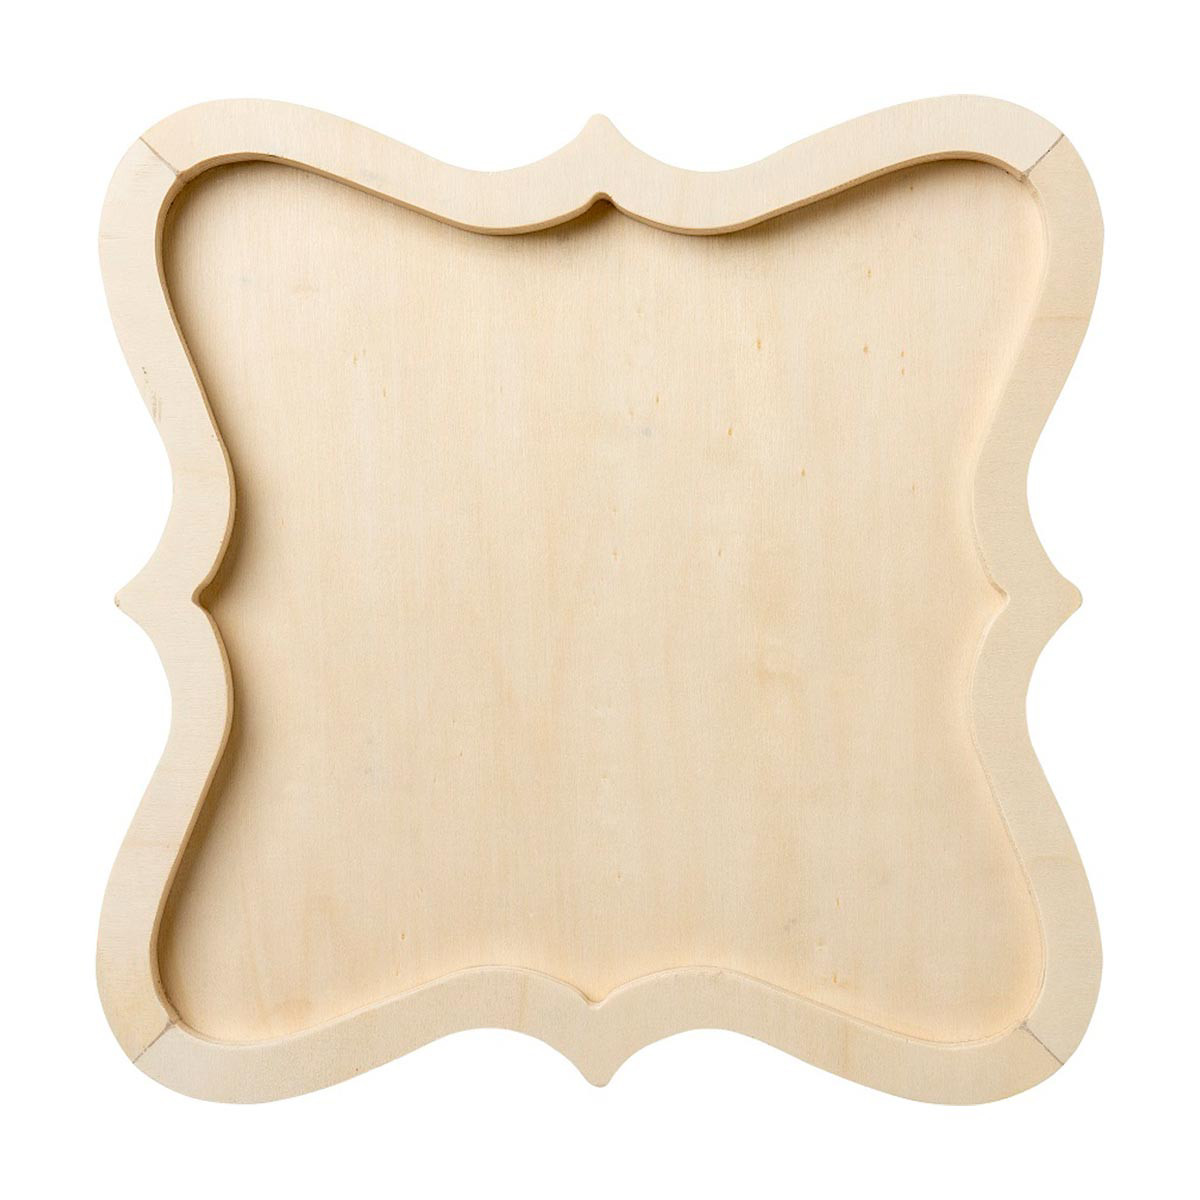 Plaid Unpainted Wood Scalloped Panel Plaque, 12" x 12"